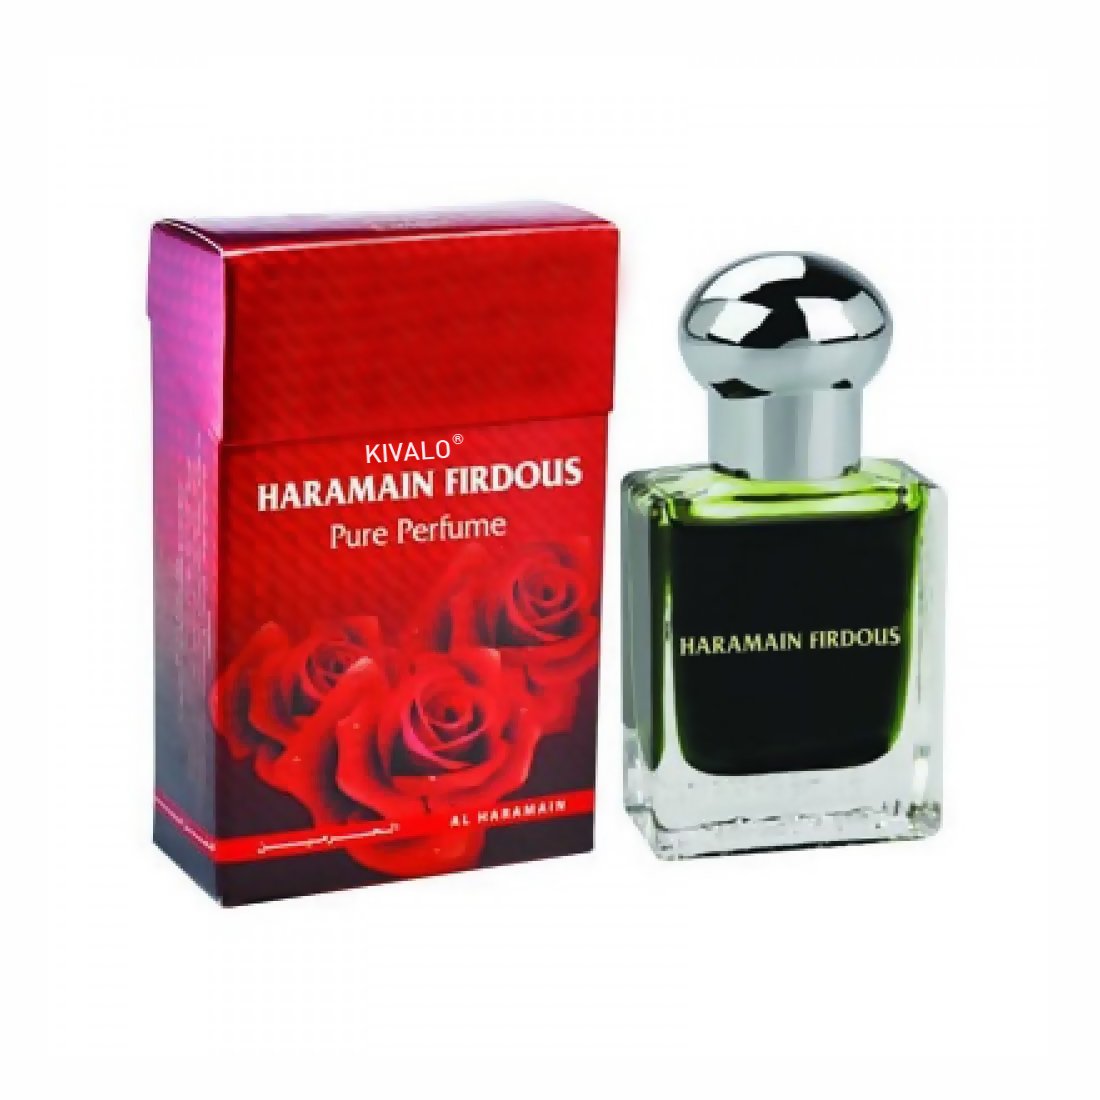 Al Haramain Firdous & Forever Fragrance Pure Original Roll on Perfume Oil Pack of 2 (Attar) - 2 x 15 ml